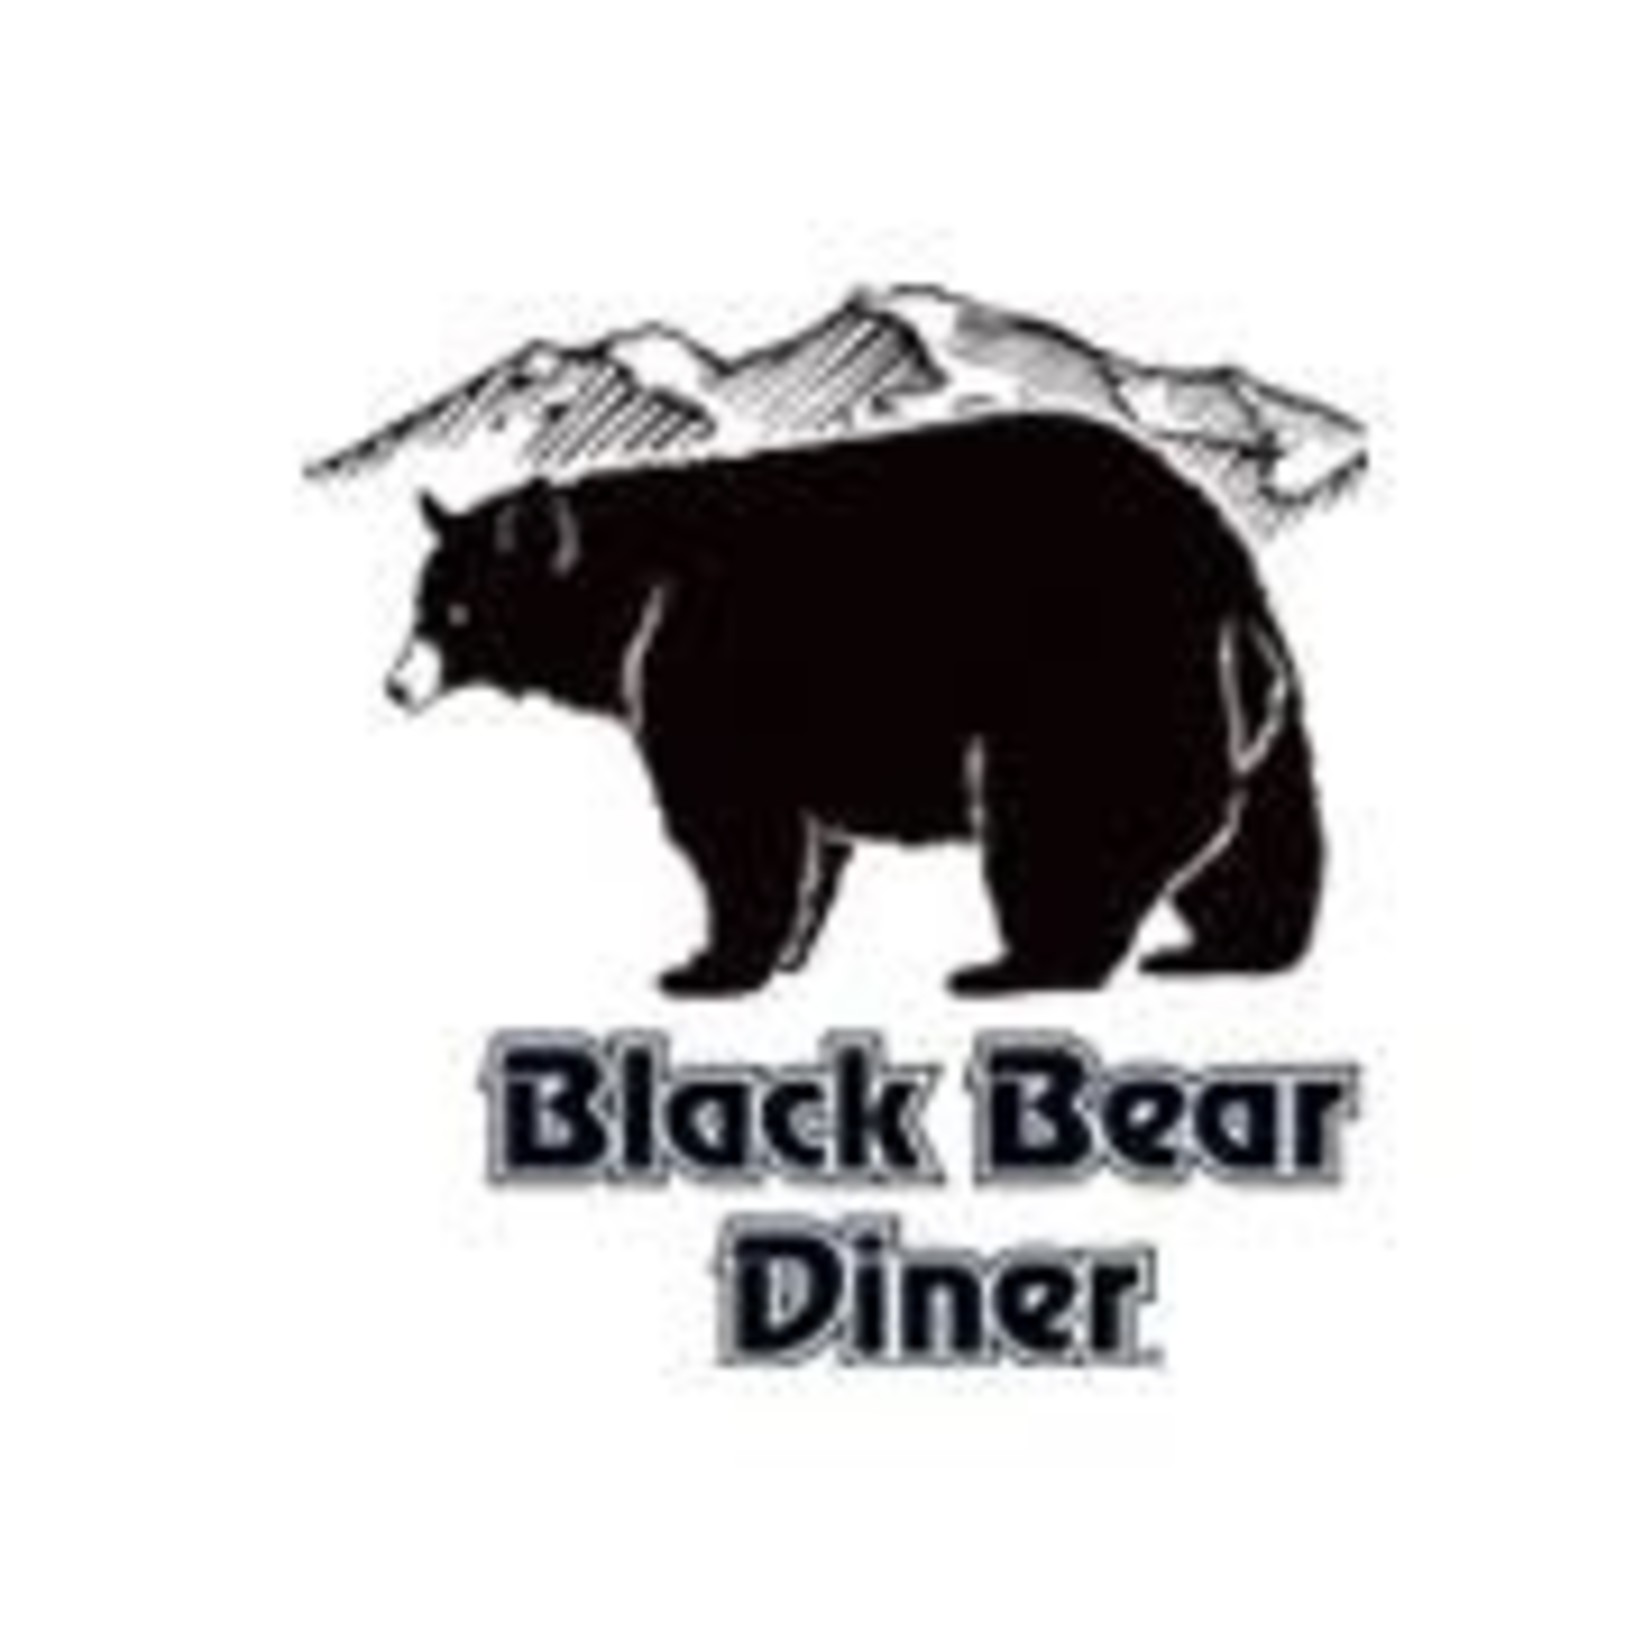 black bear diner arizona locations